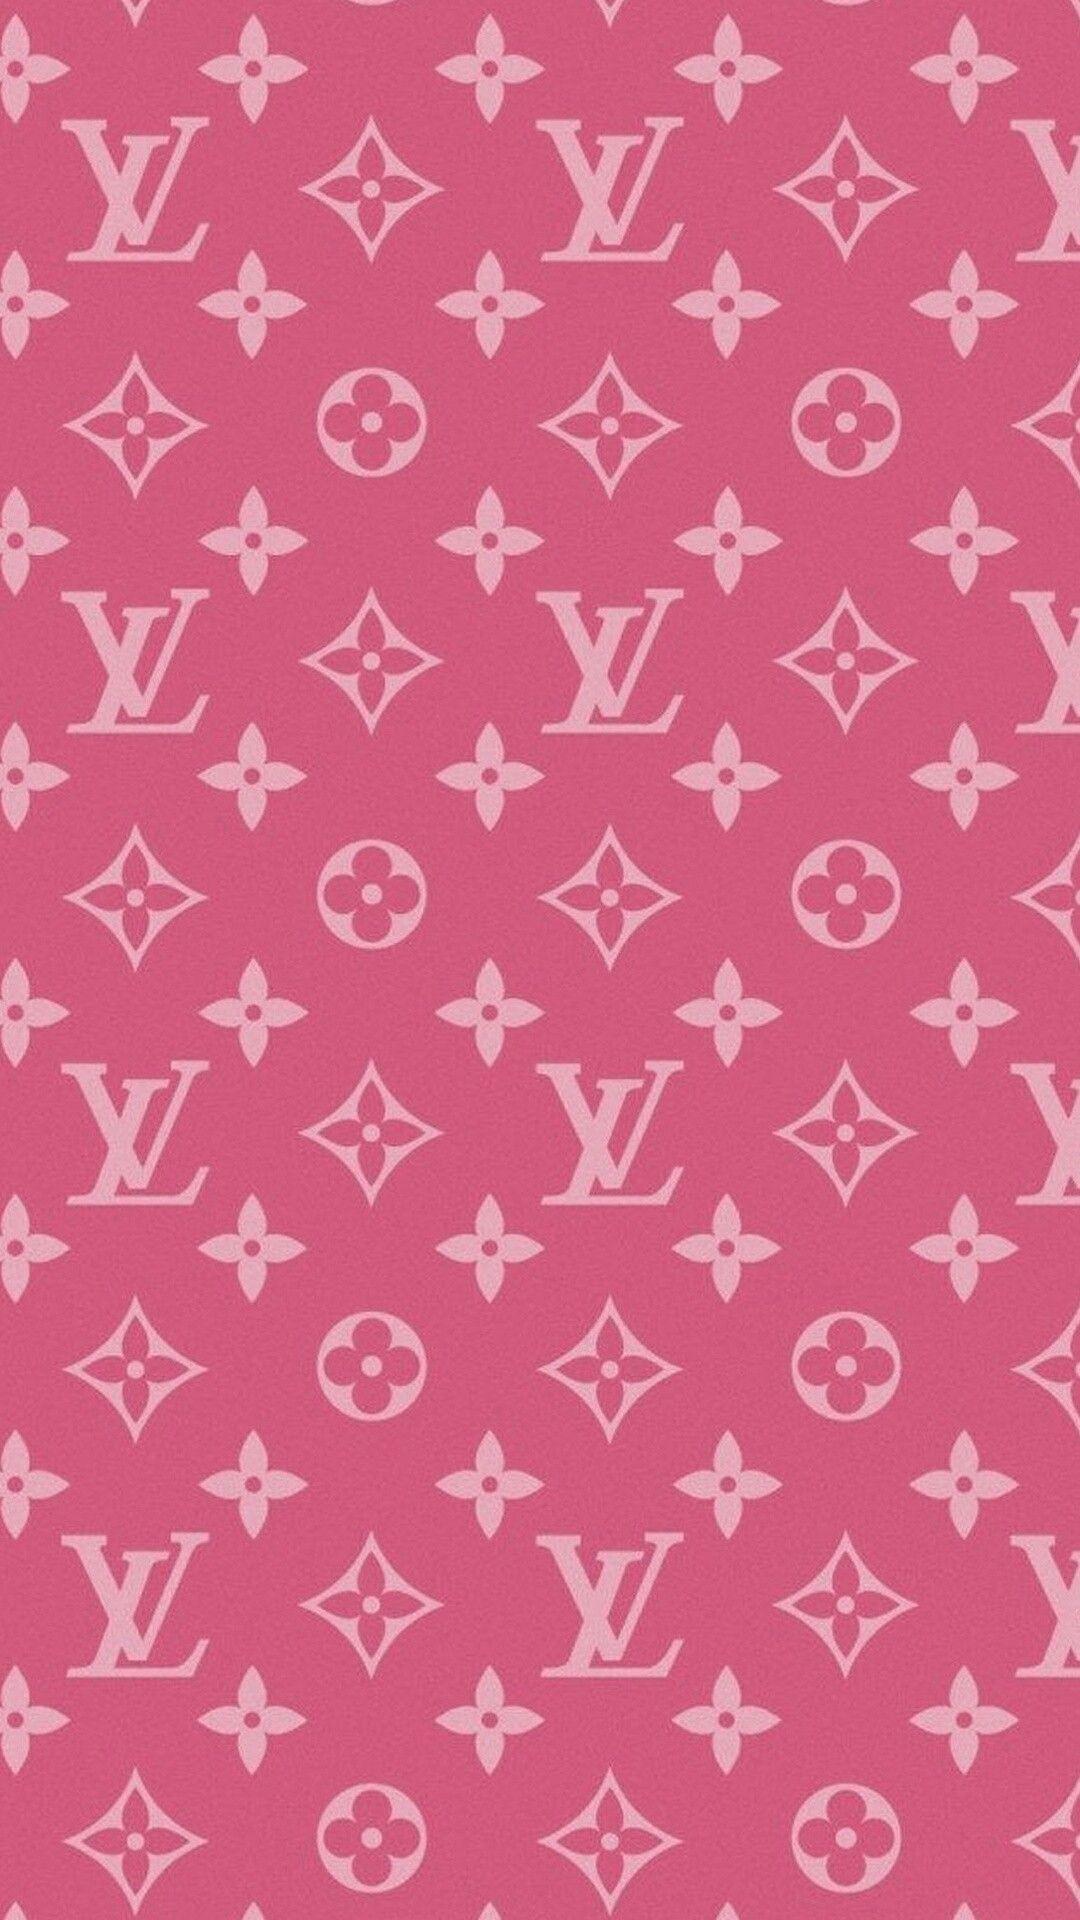 Download Red Supreme Logo Louis Vuitton Wallpaper